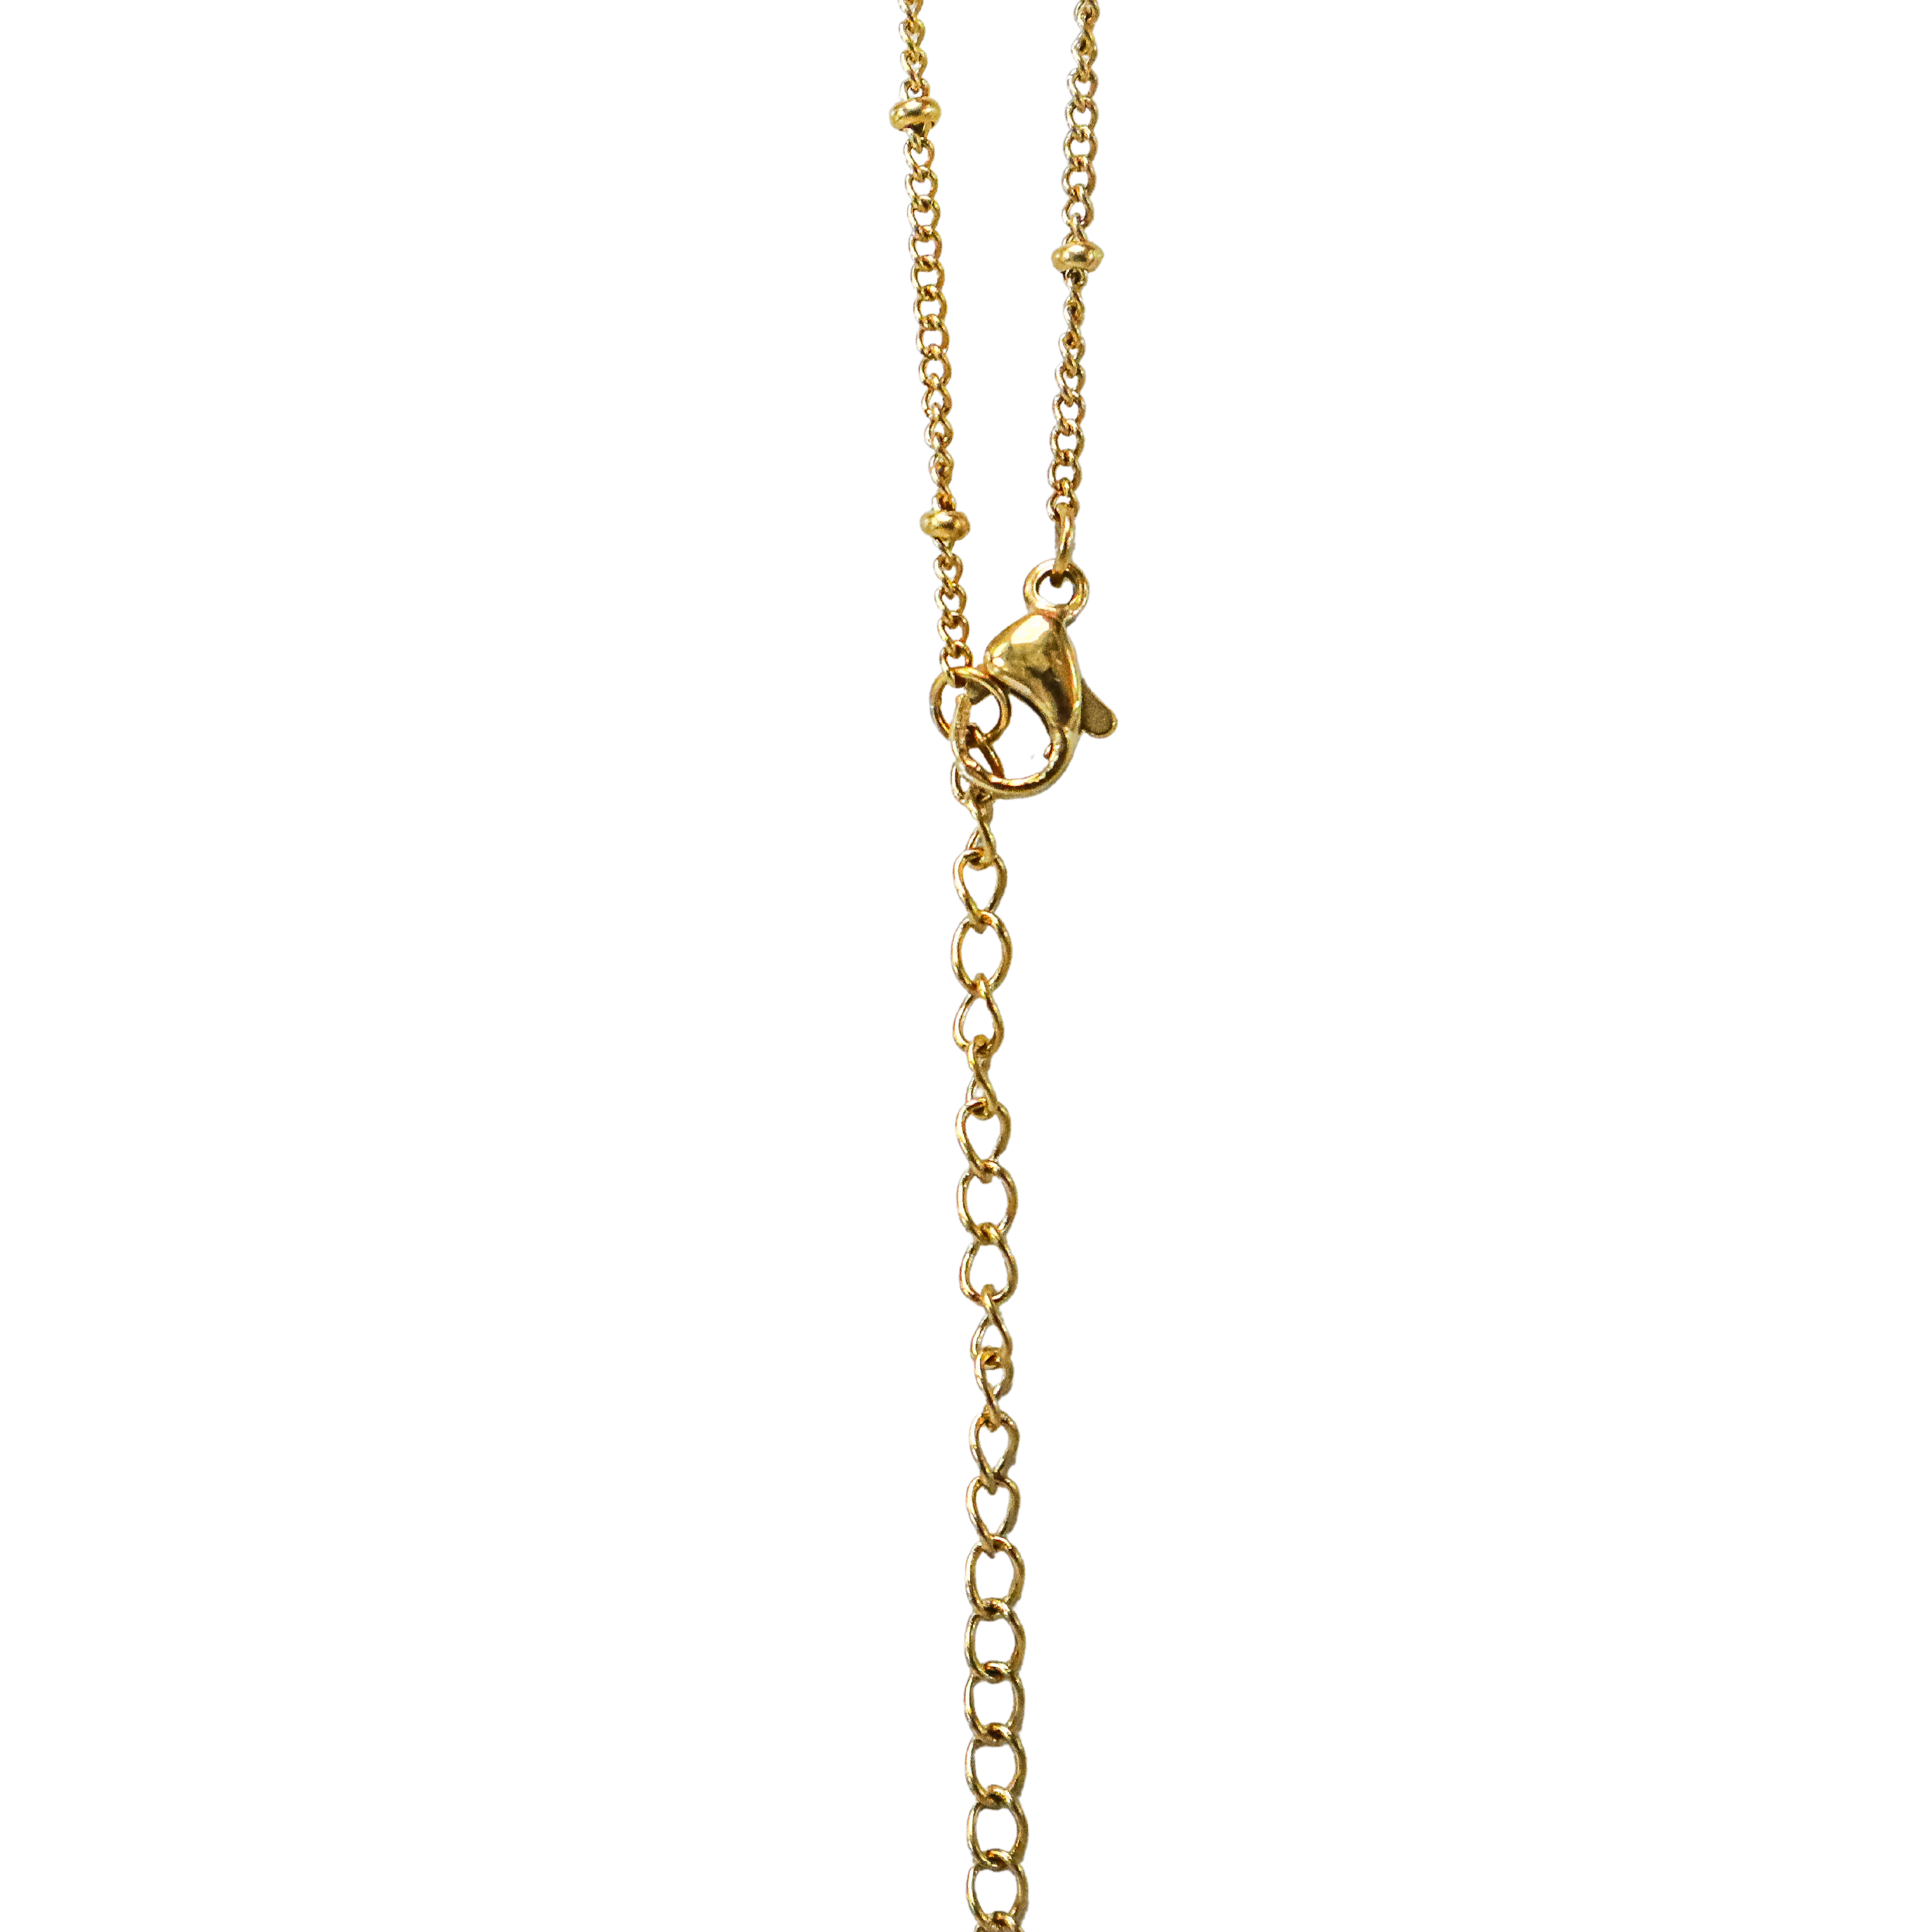 Bohdi’s Tiny Shell Necklace